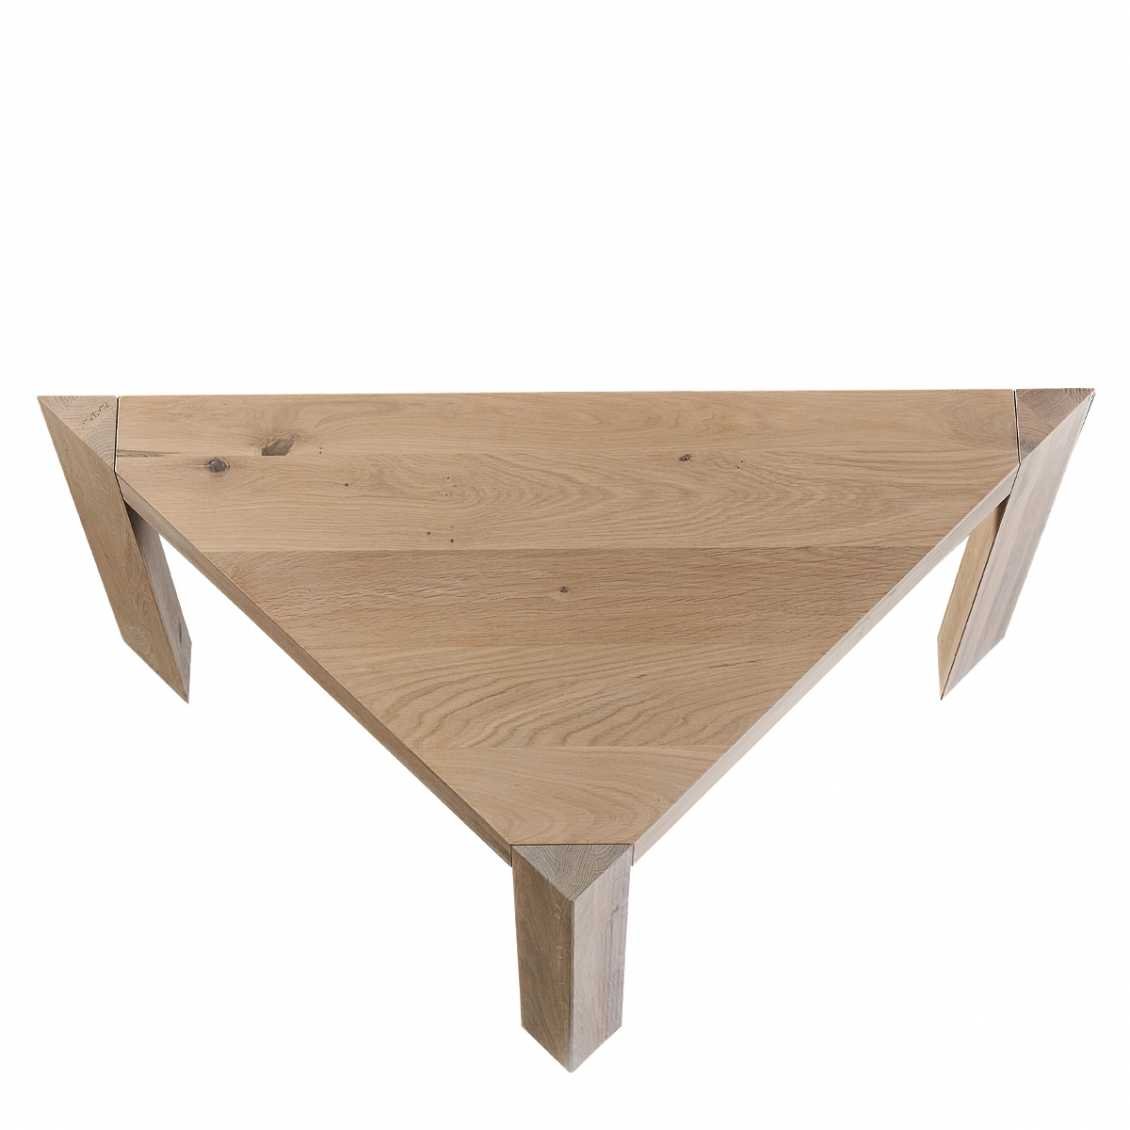 Looking into wooden design tables | Pilat&Pilat